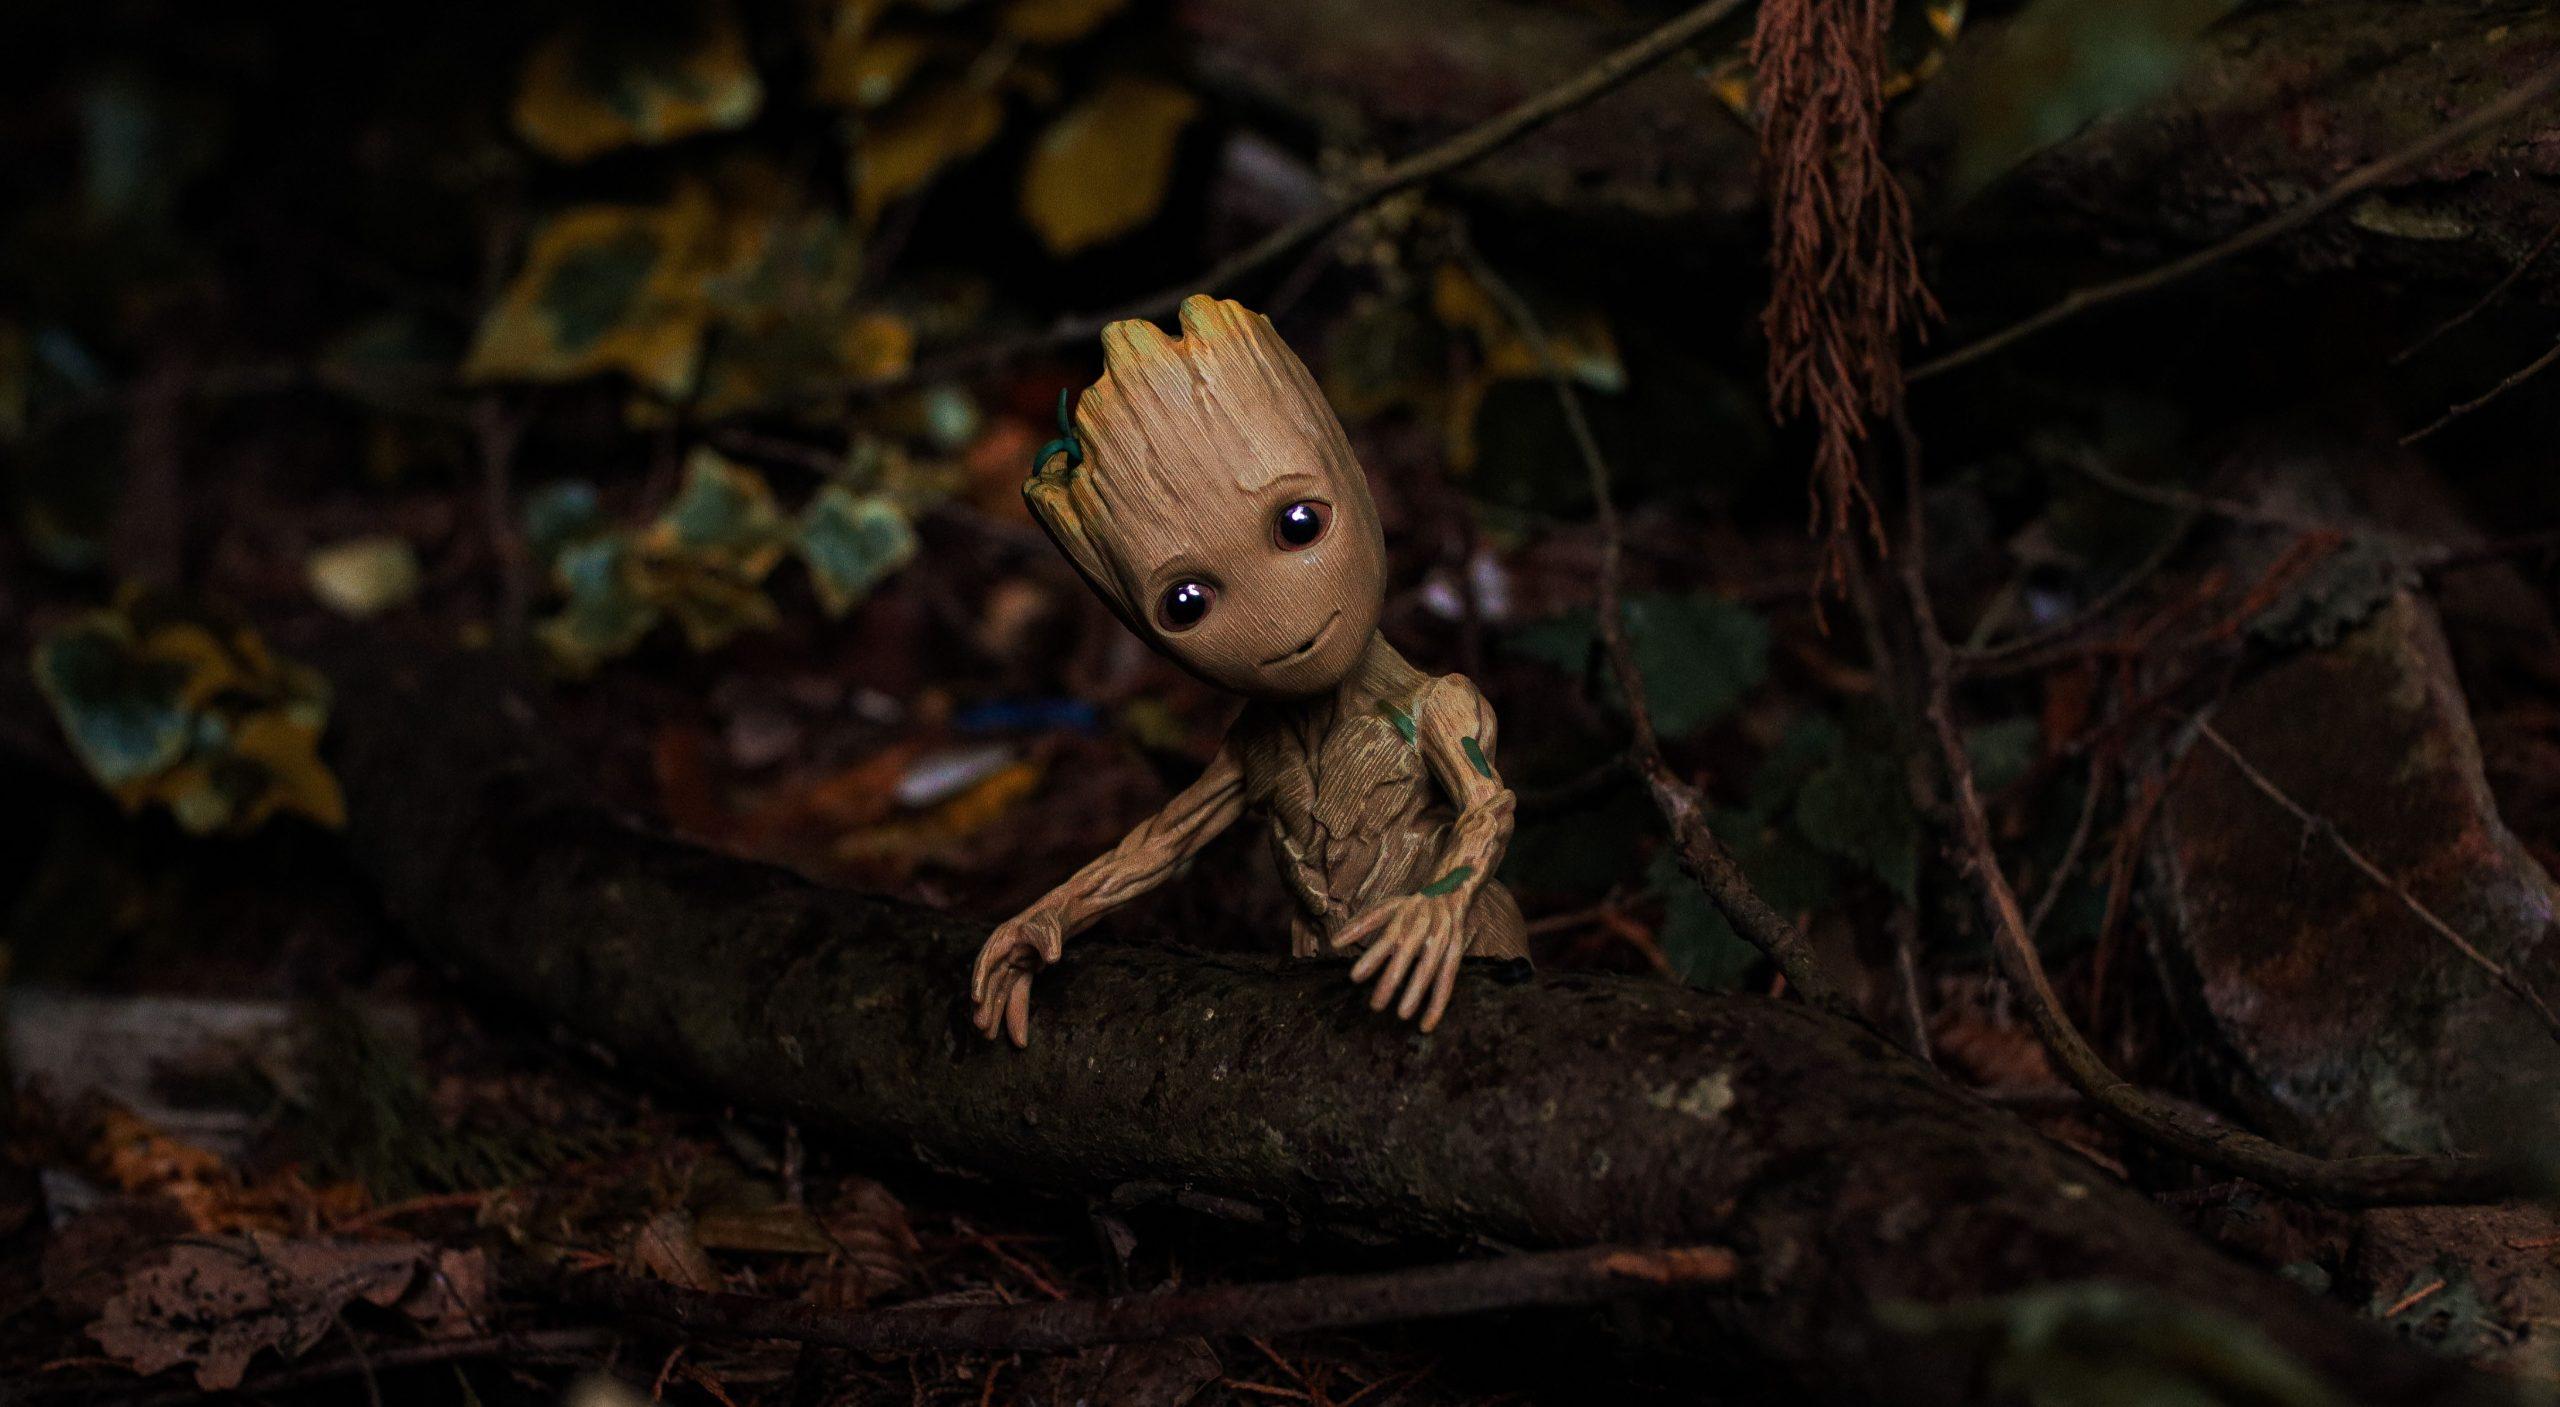 Groot figurine in woods-like setting.